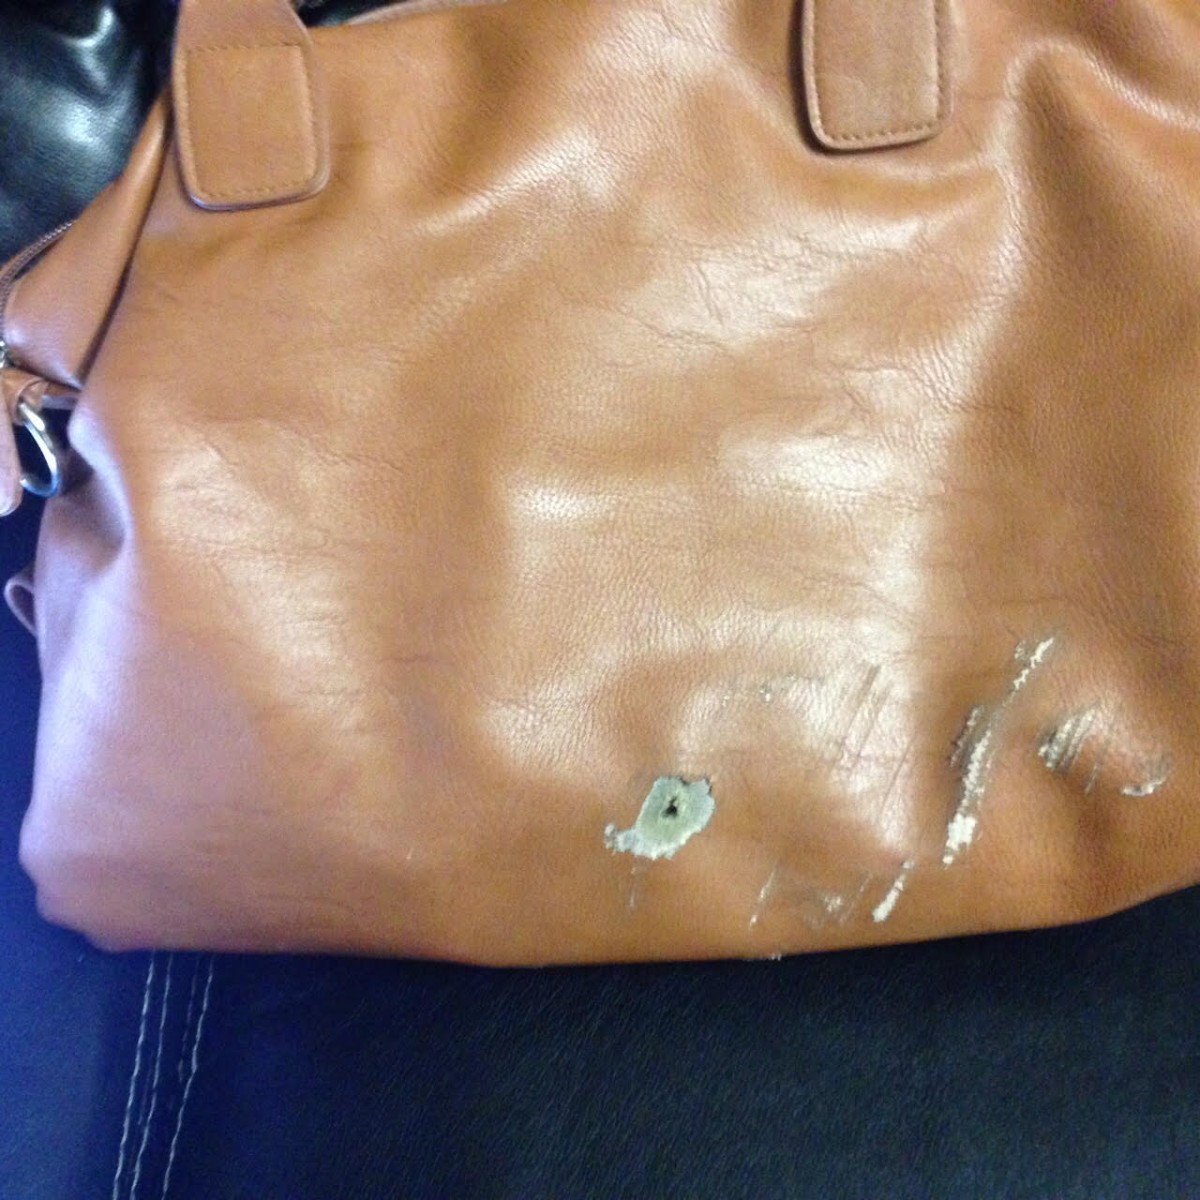 leather bag repairs near me